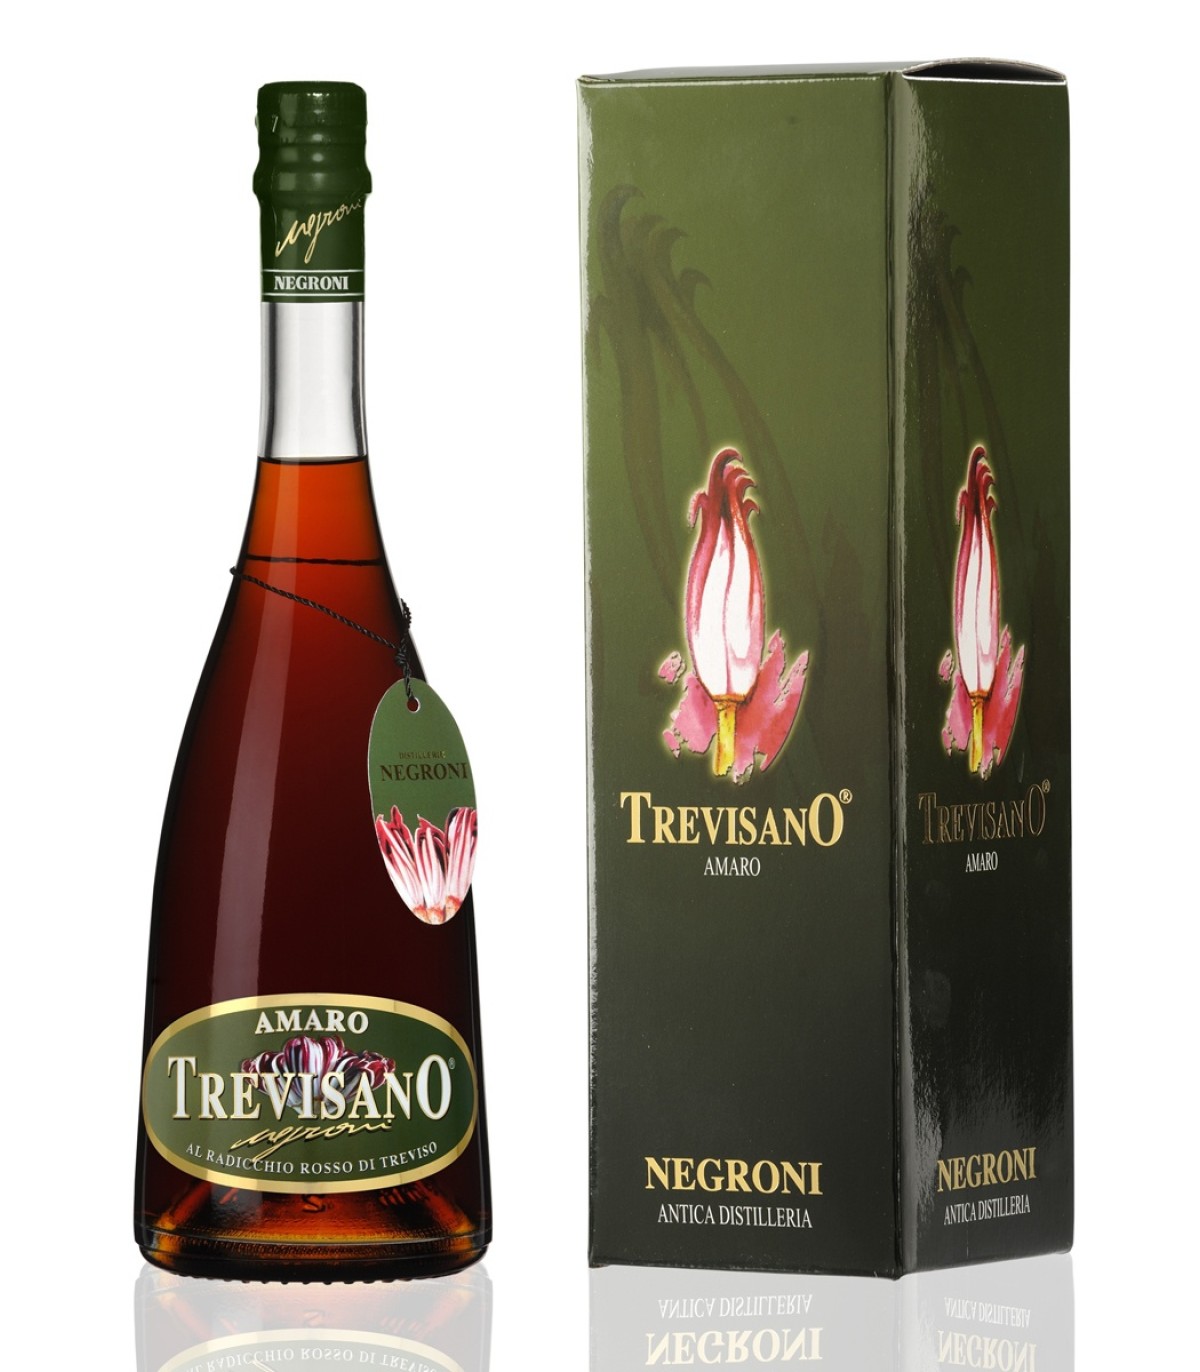 Amaro Trevisano 70cl with box - Negroni Antica Distilleria